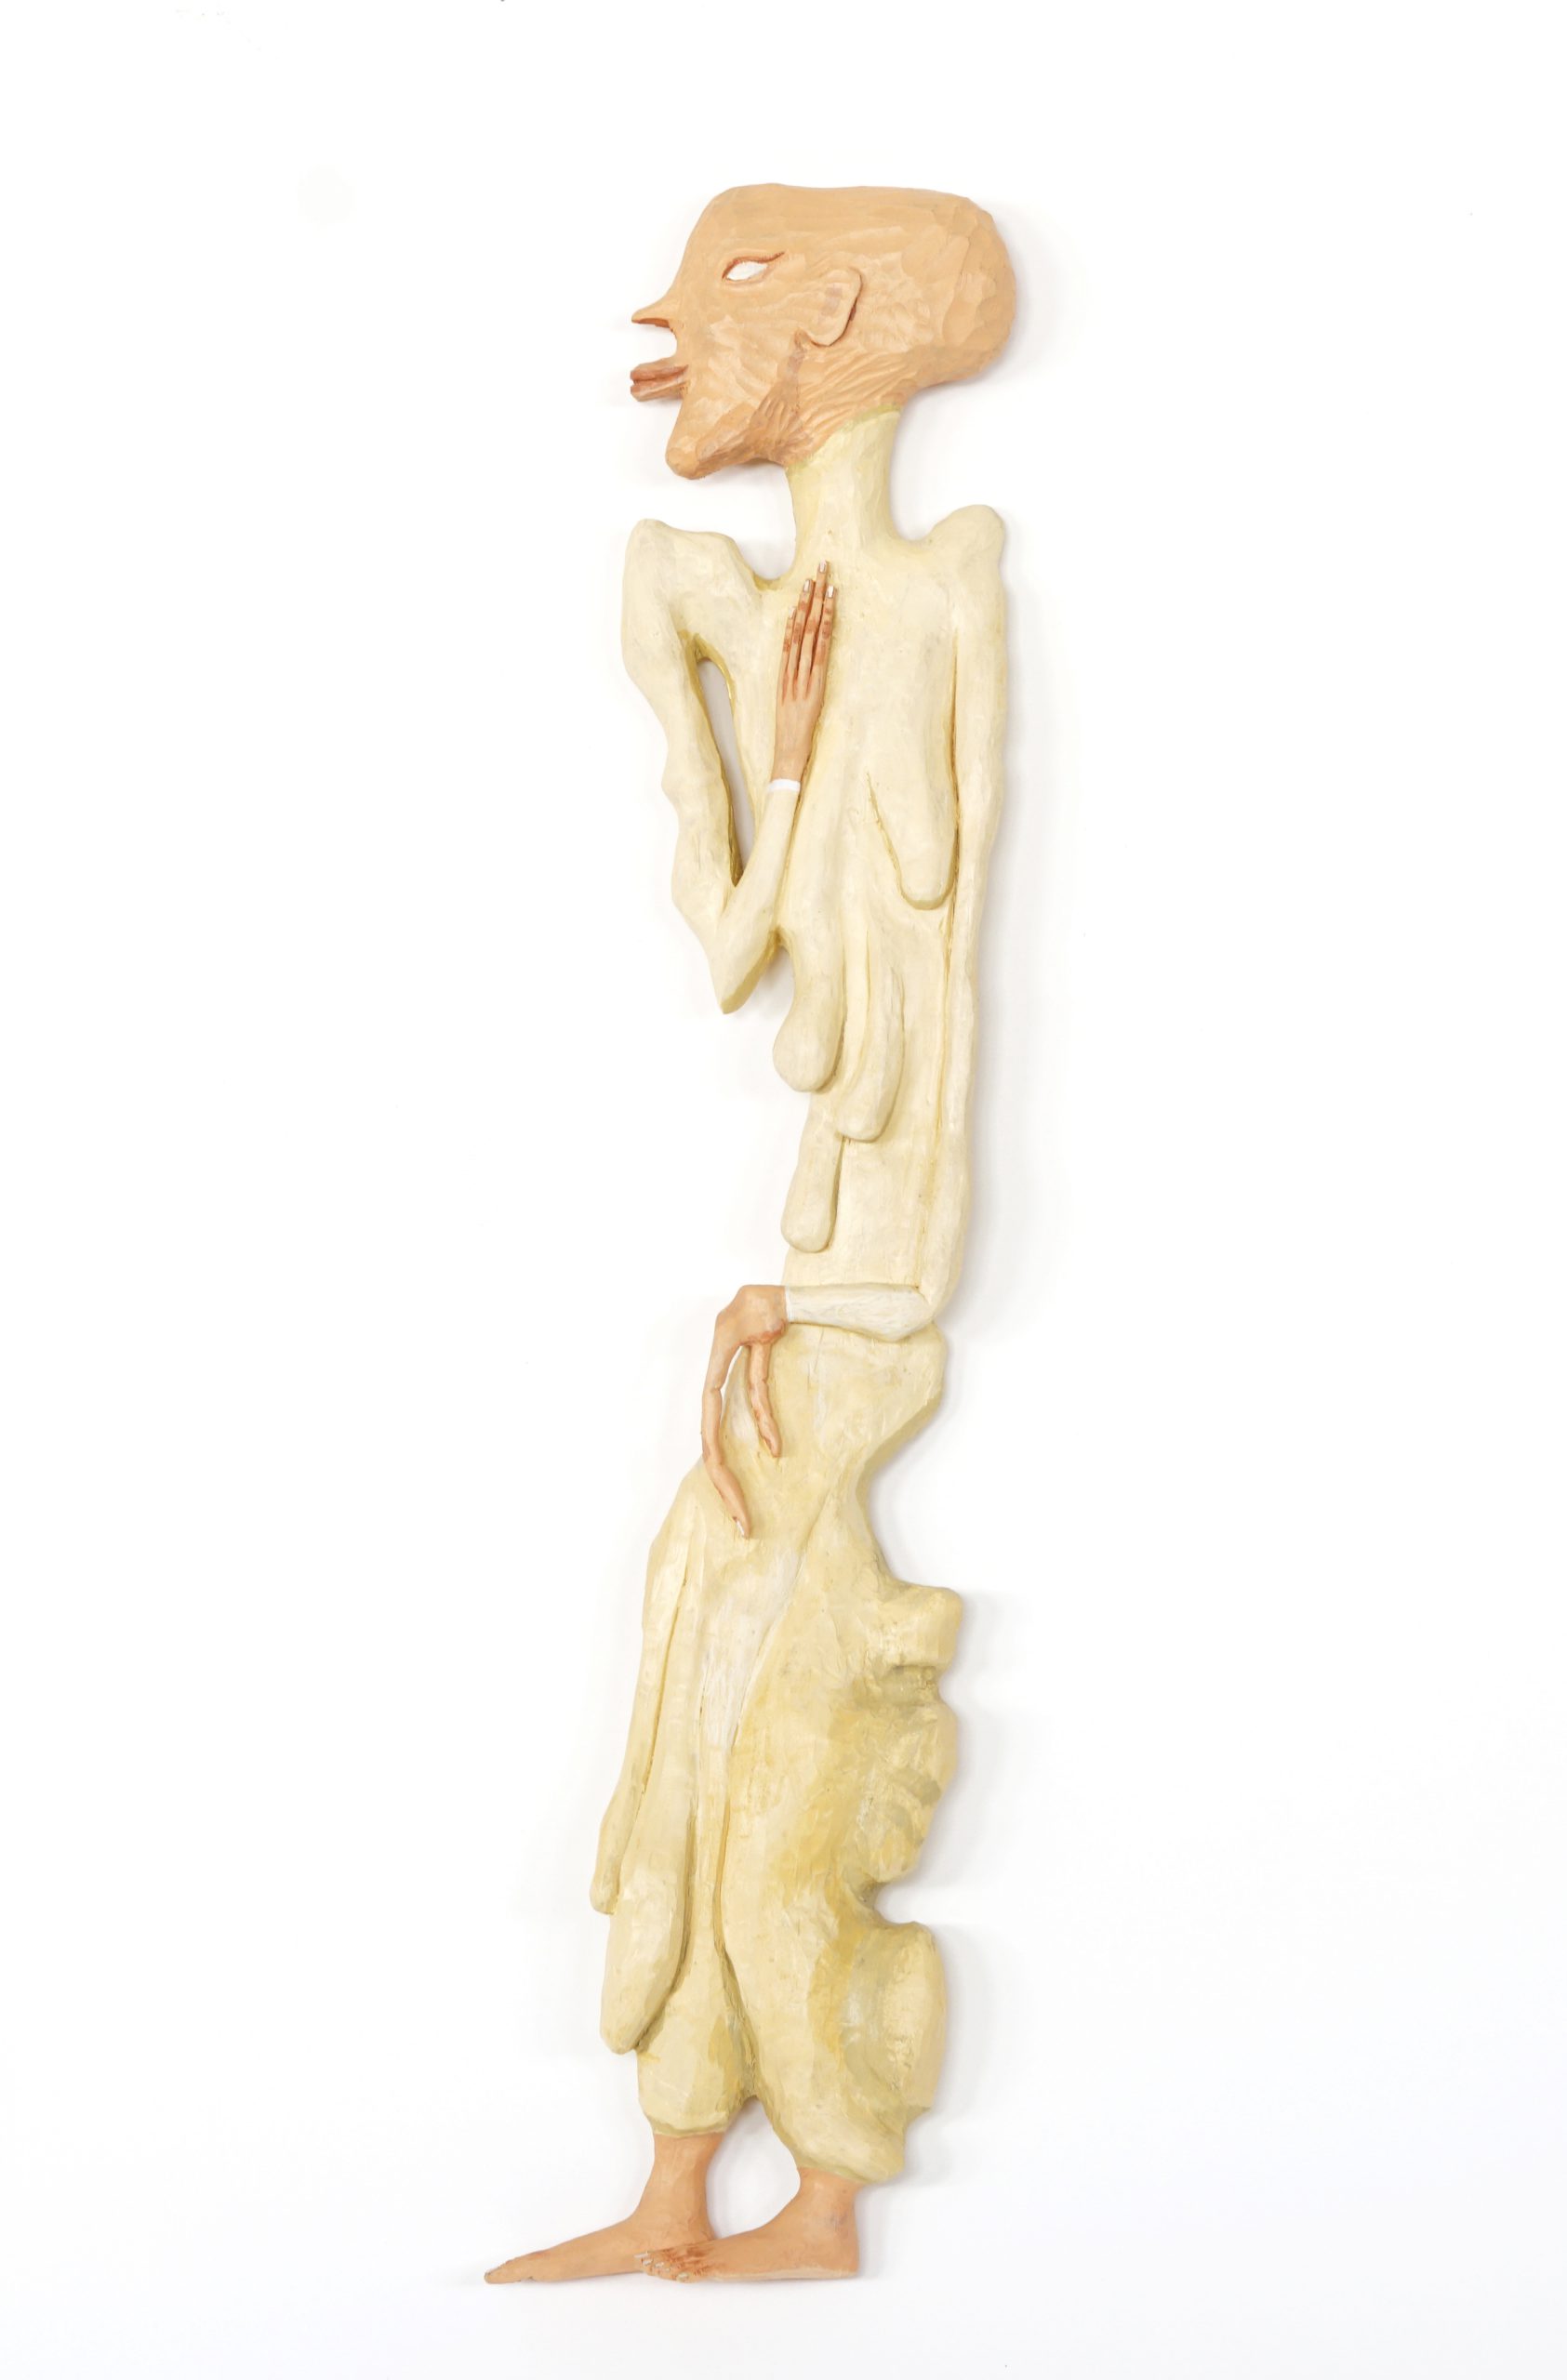 Halil Balabin & Merav Kamel, Dough Man, 2022
Linden wood and acrylic,
83x16x6 cm